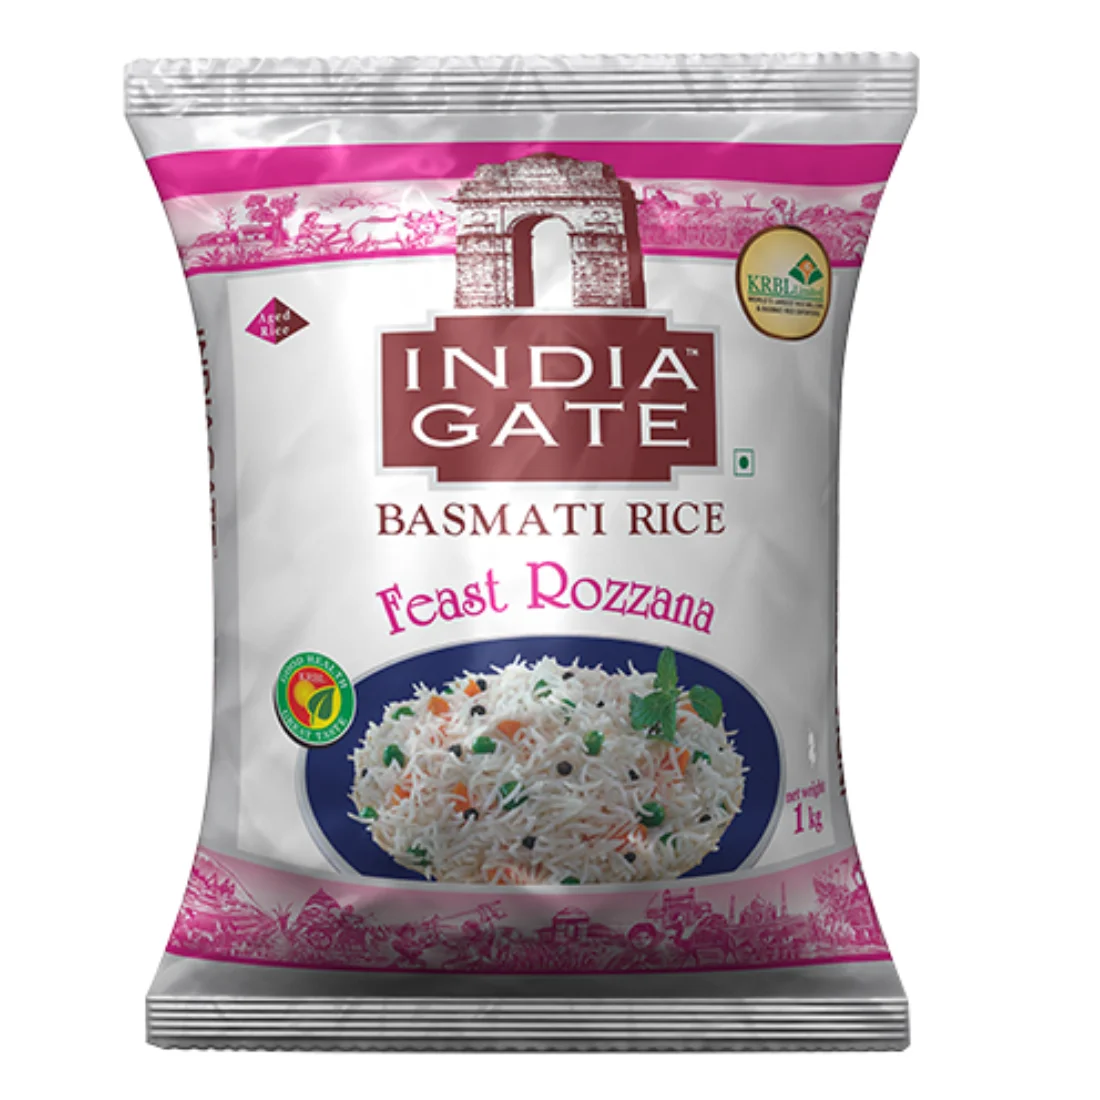 Indiagate Basmati Rice-Feast Rozanna 1 Kg